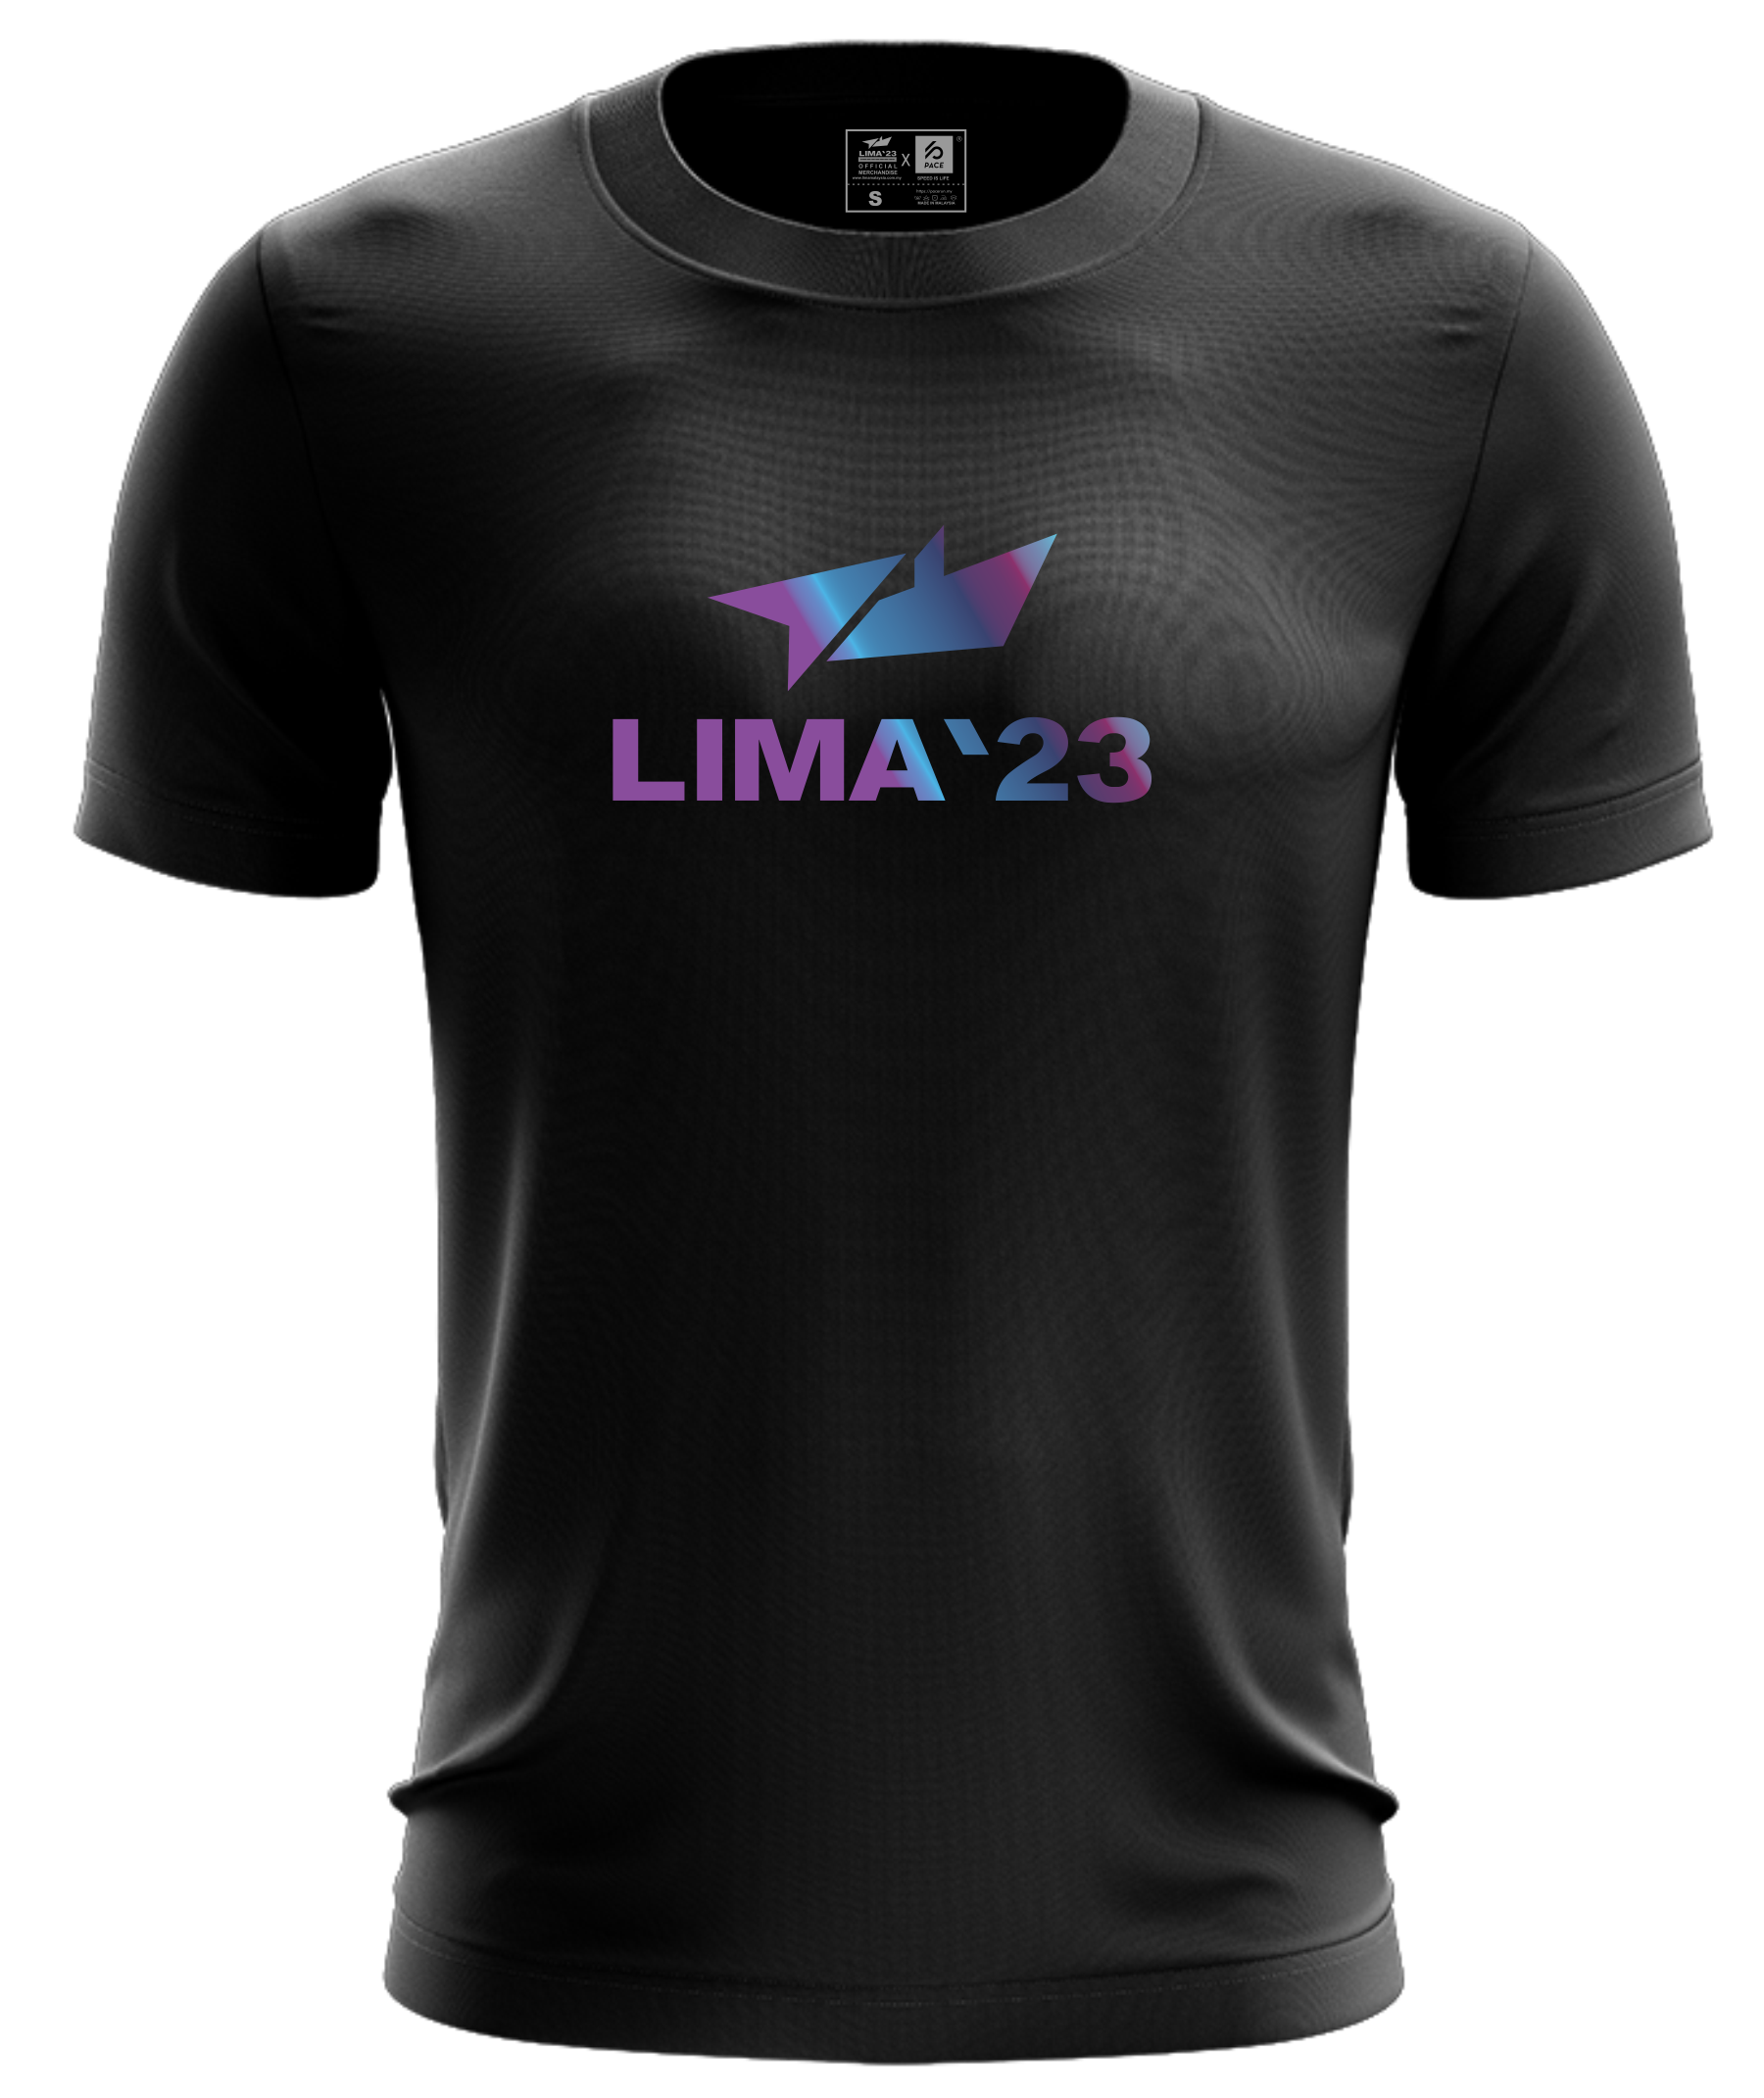 LIMA23 Kids Rainbow Reflective Tee Shirt Black & White